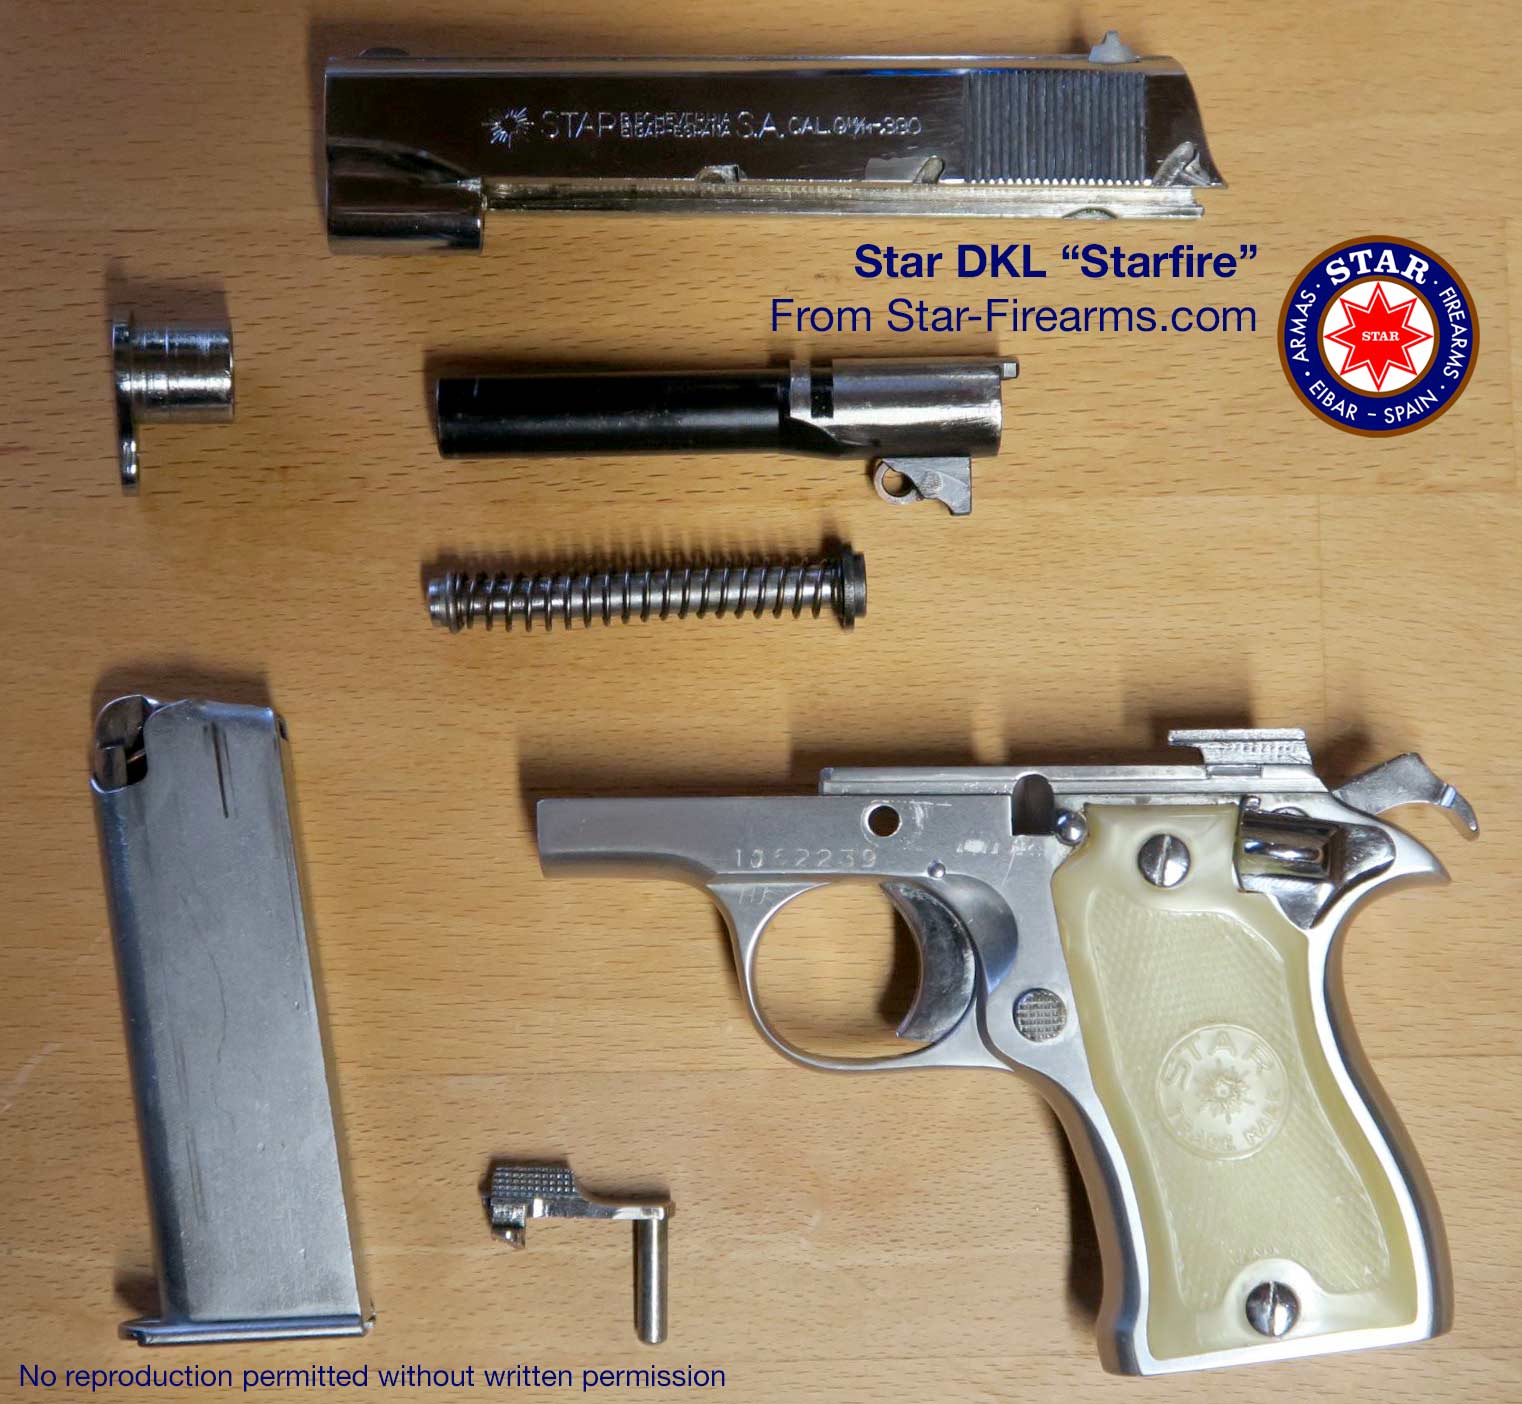 A stripped model DKL Starfire pistol.